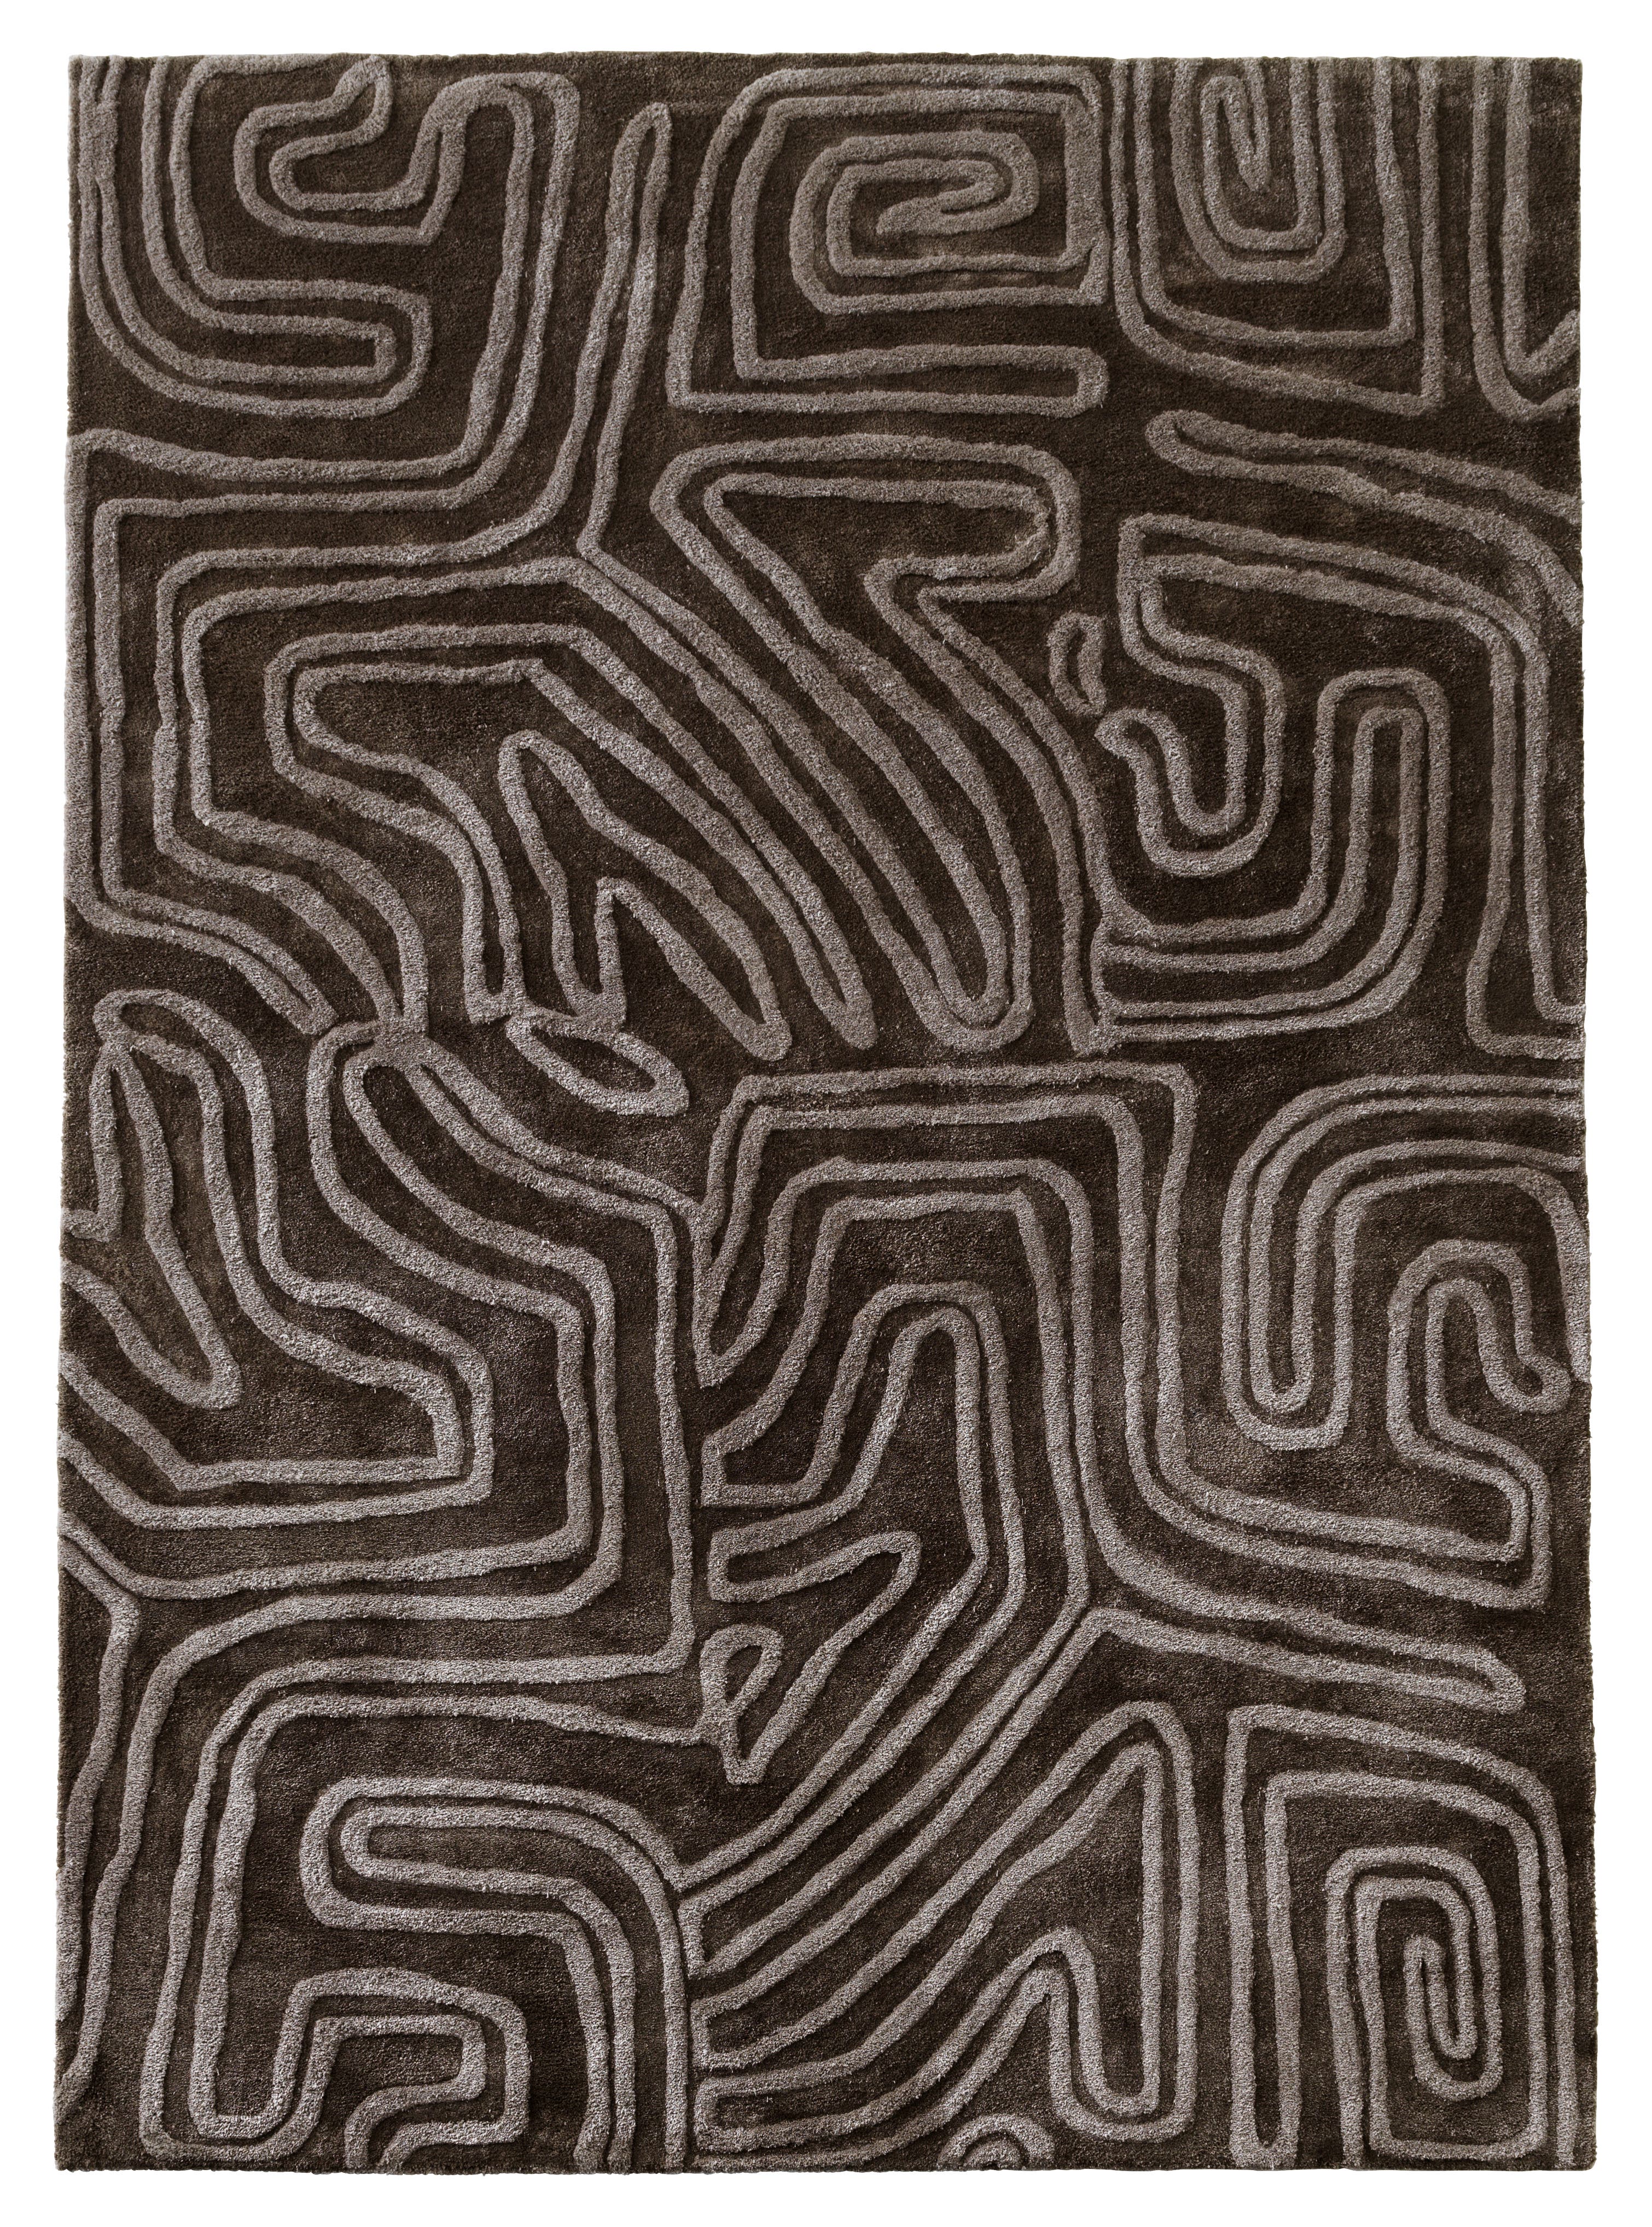 Passage 地毯